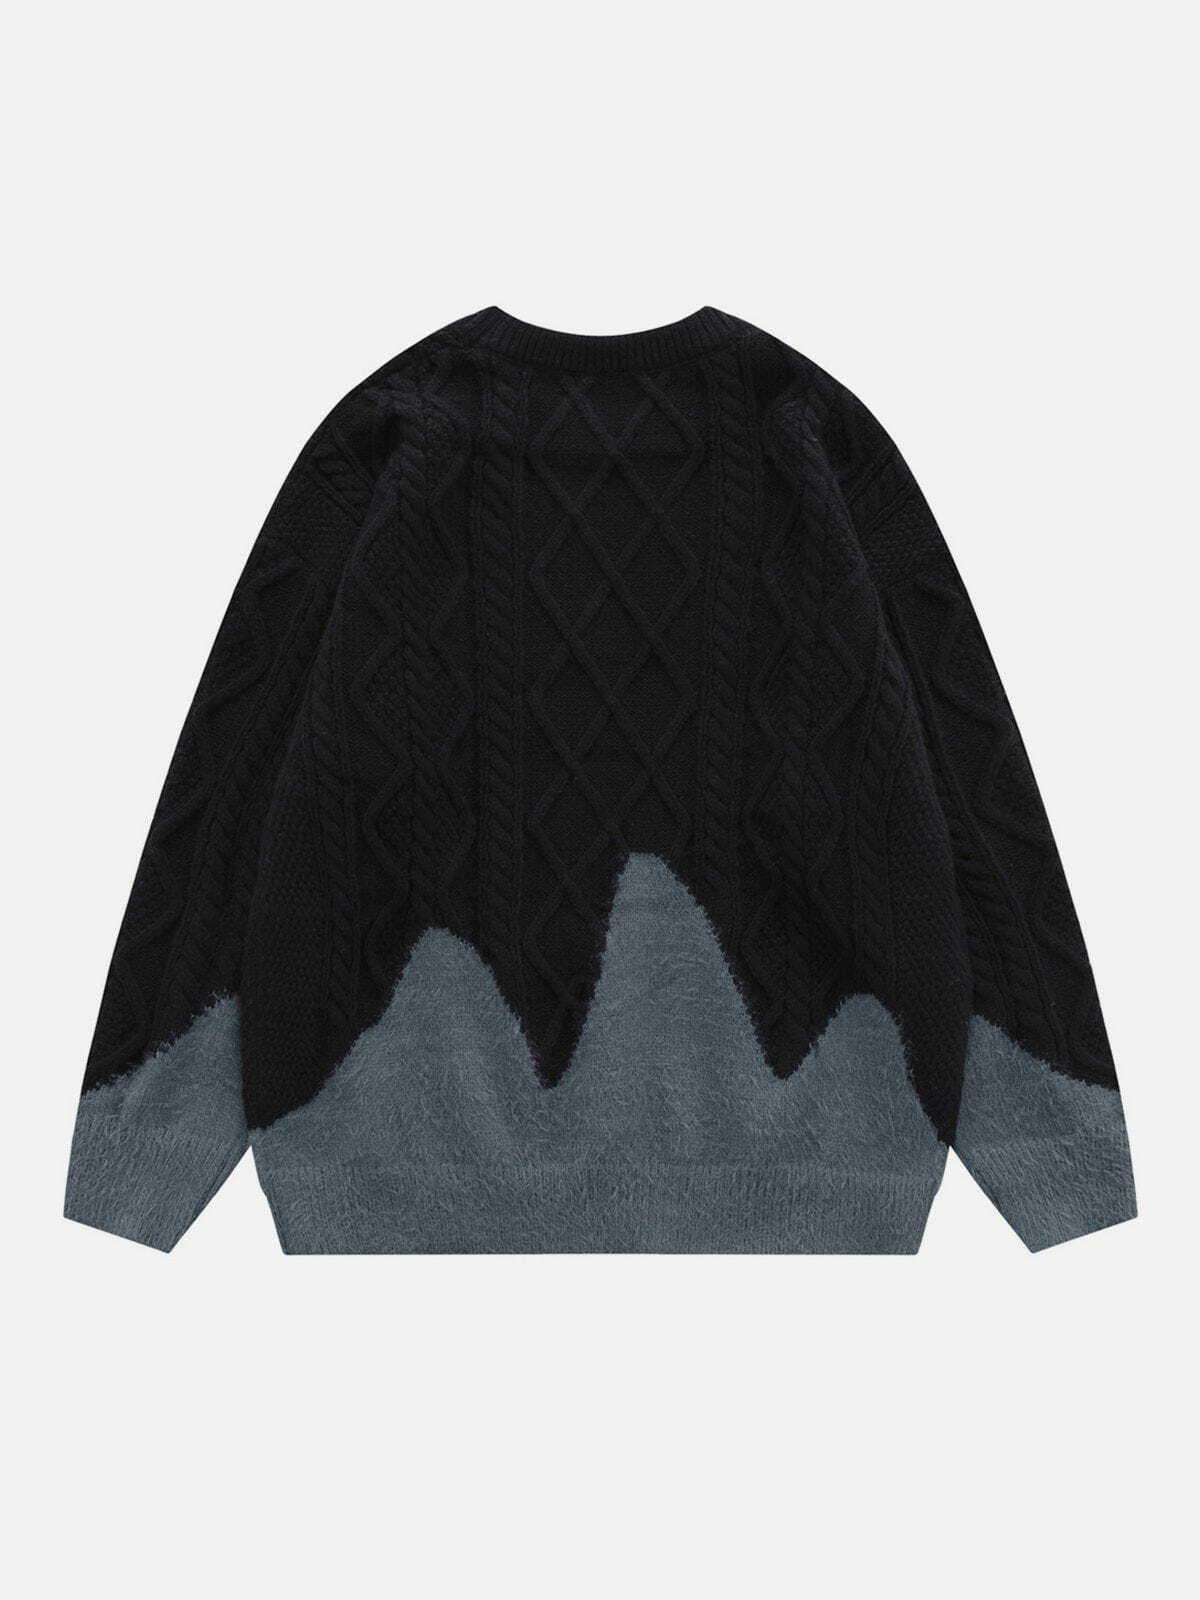 colorblock vintage sweater edgy y2k fashion icon 1441